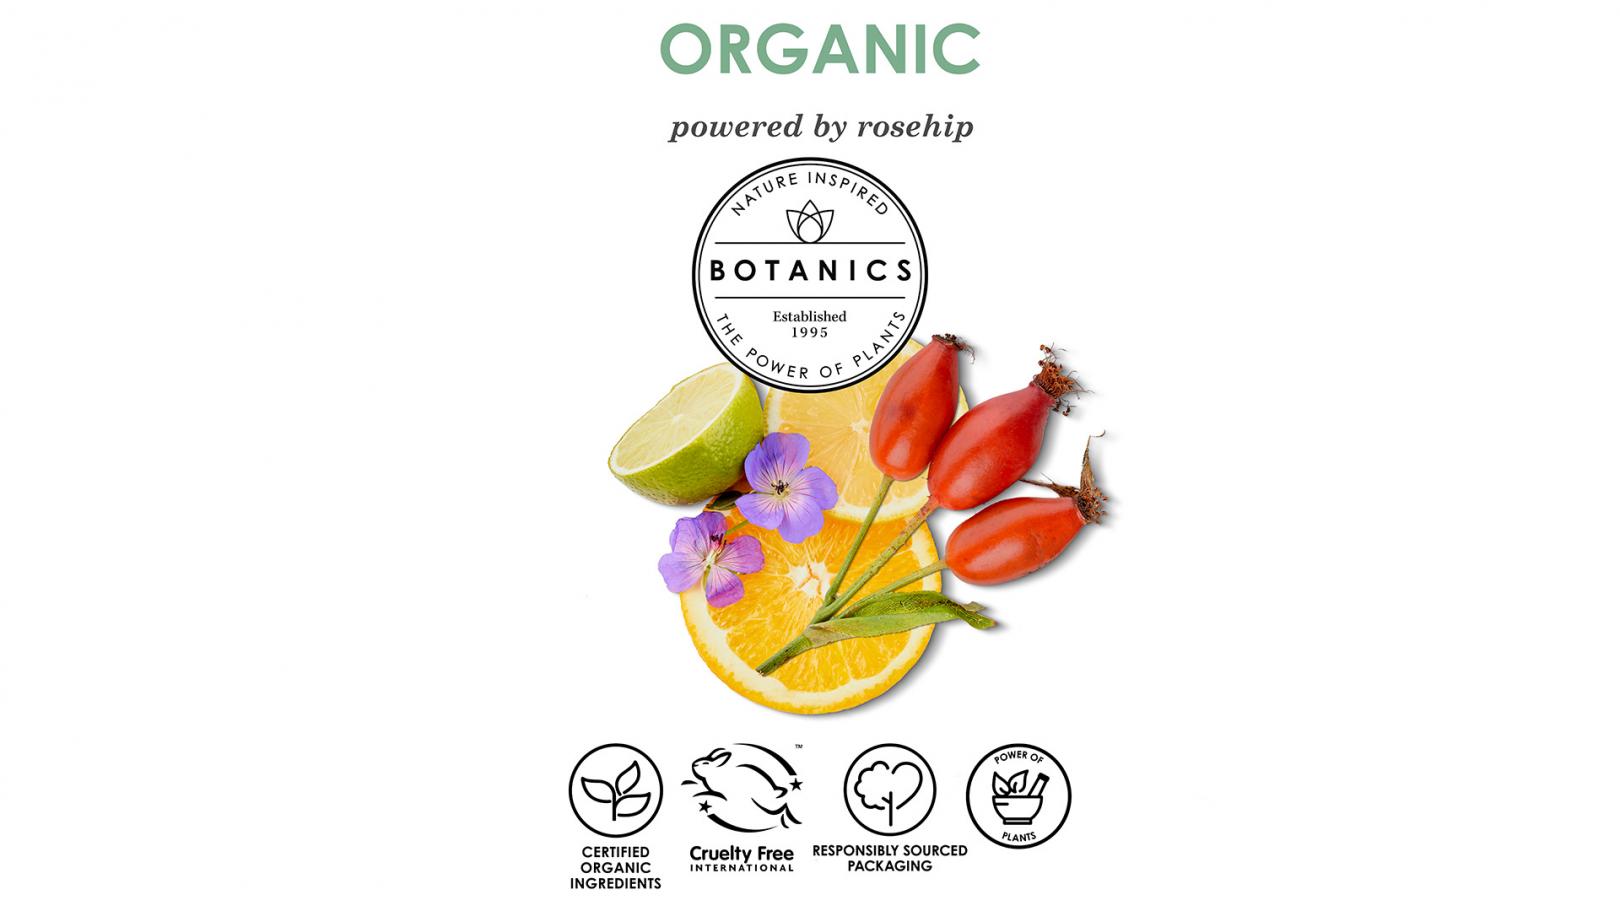 Botanics Organic powered by rosehip certificate